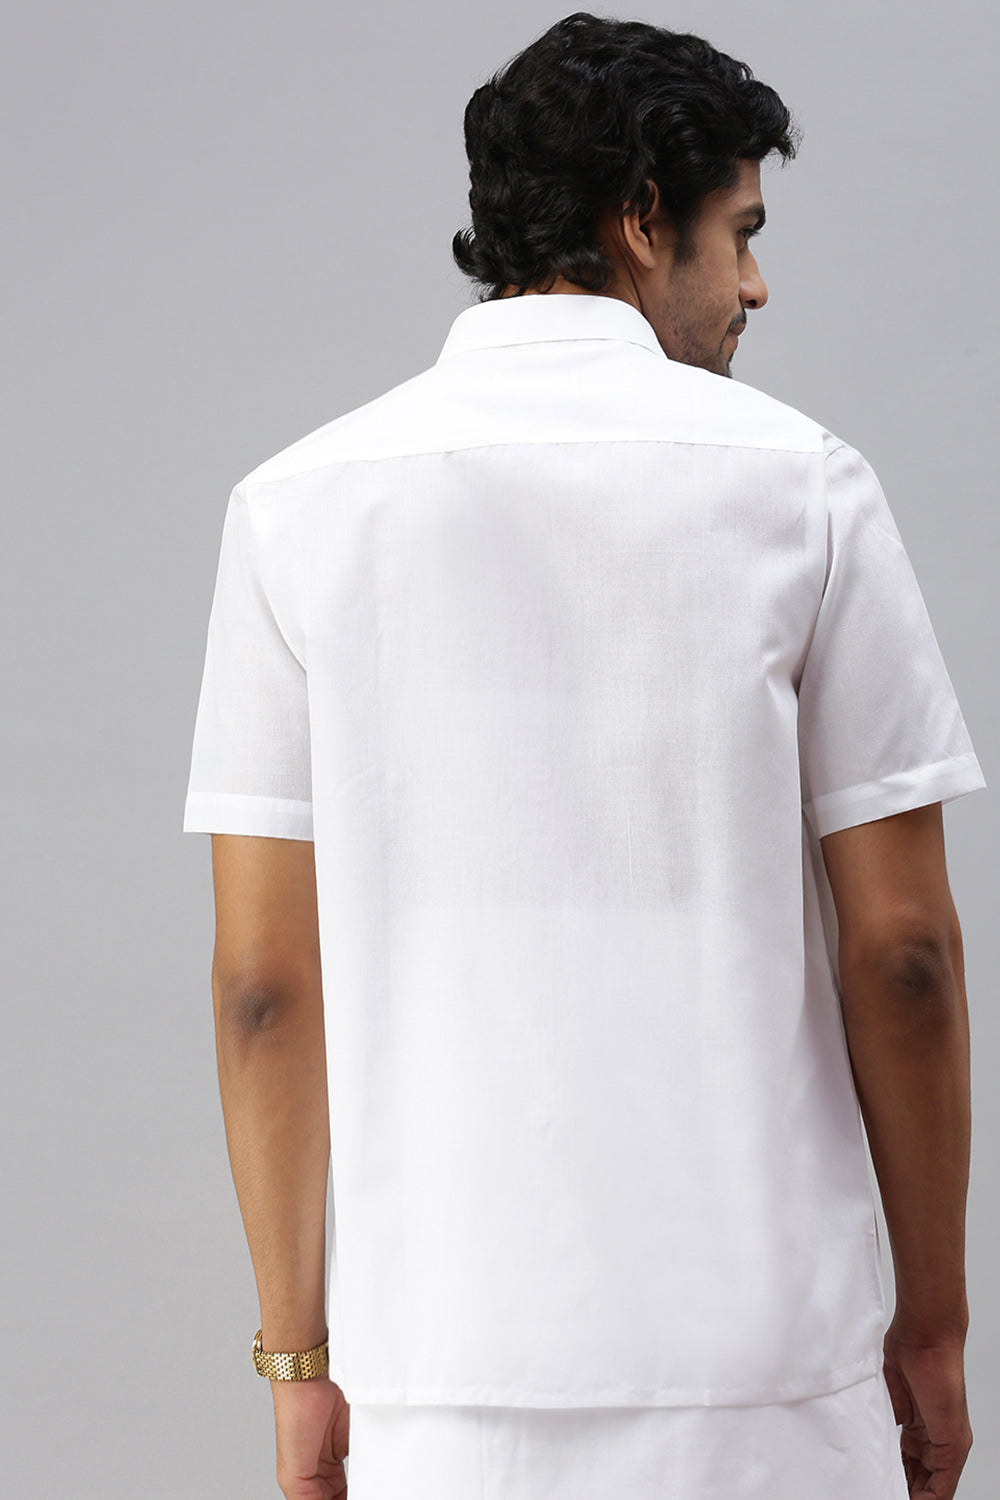 Mens Spill Resistant Guard 100% Cotton White Shirt Half Sleeves Elite Cotton -Back view